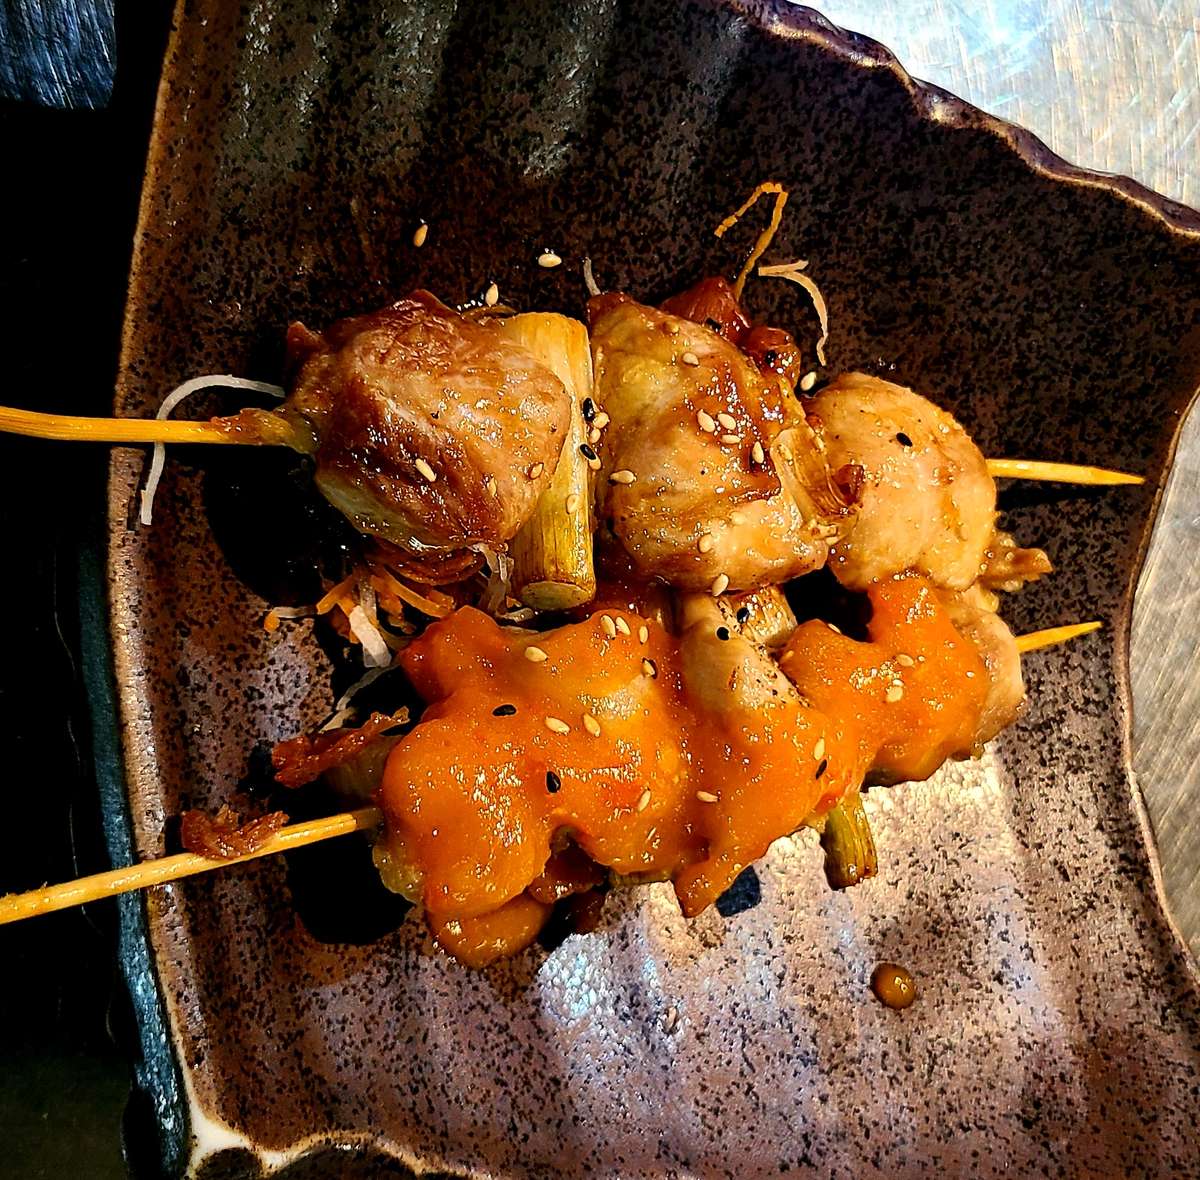 Buy Yakitori Skewered Chicken Thigh (8 pieces)